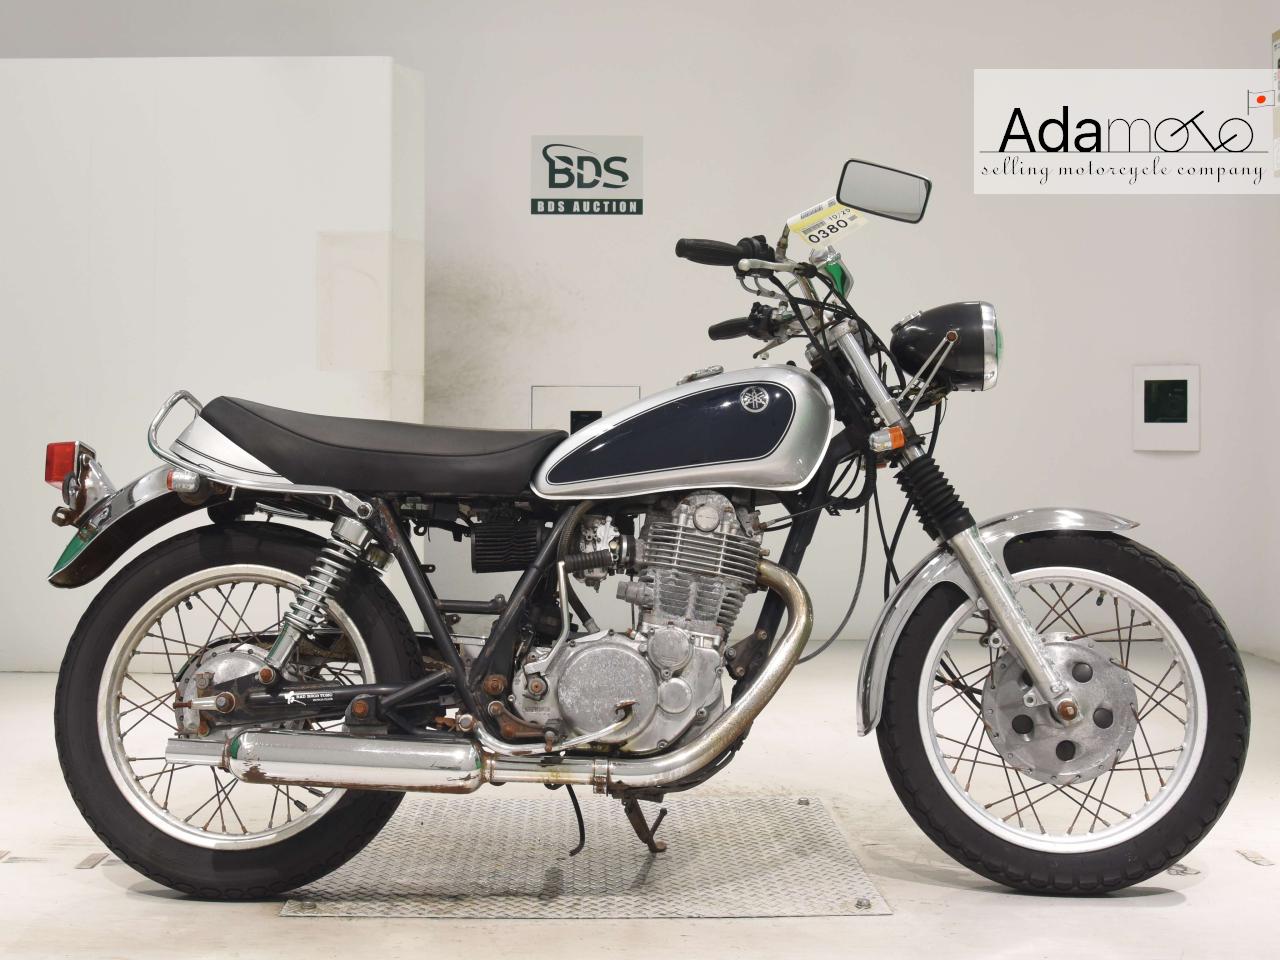 Yamaha SR400 2 - Adamoto - Motorcycles from Japan